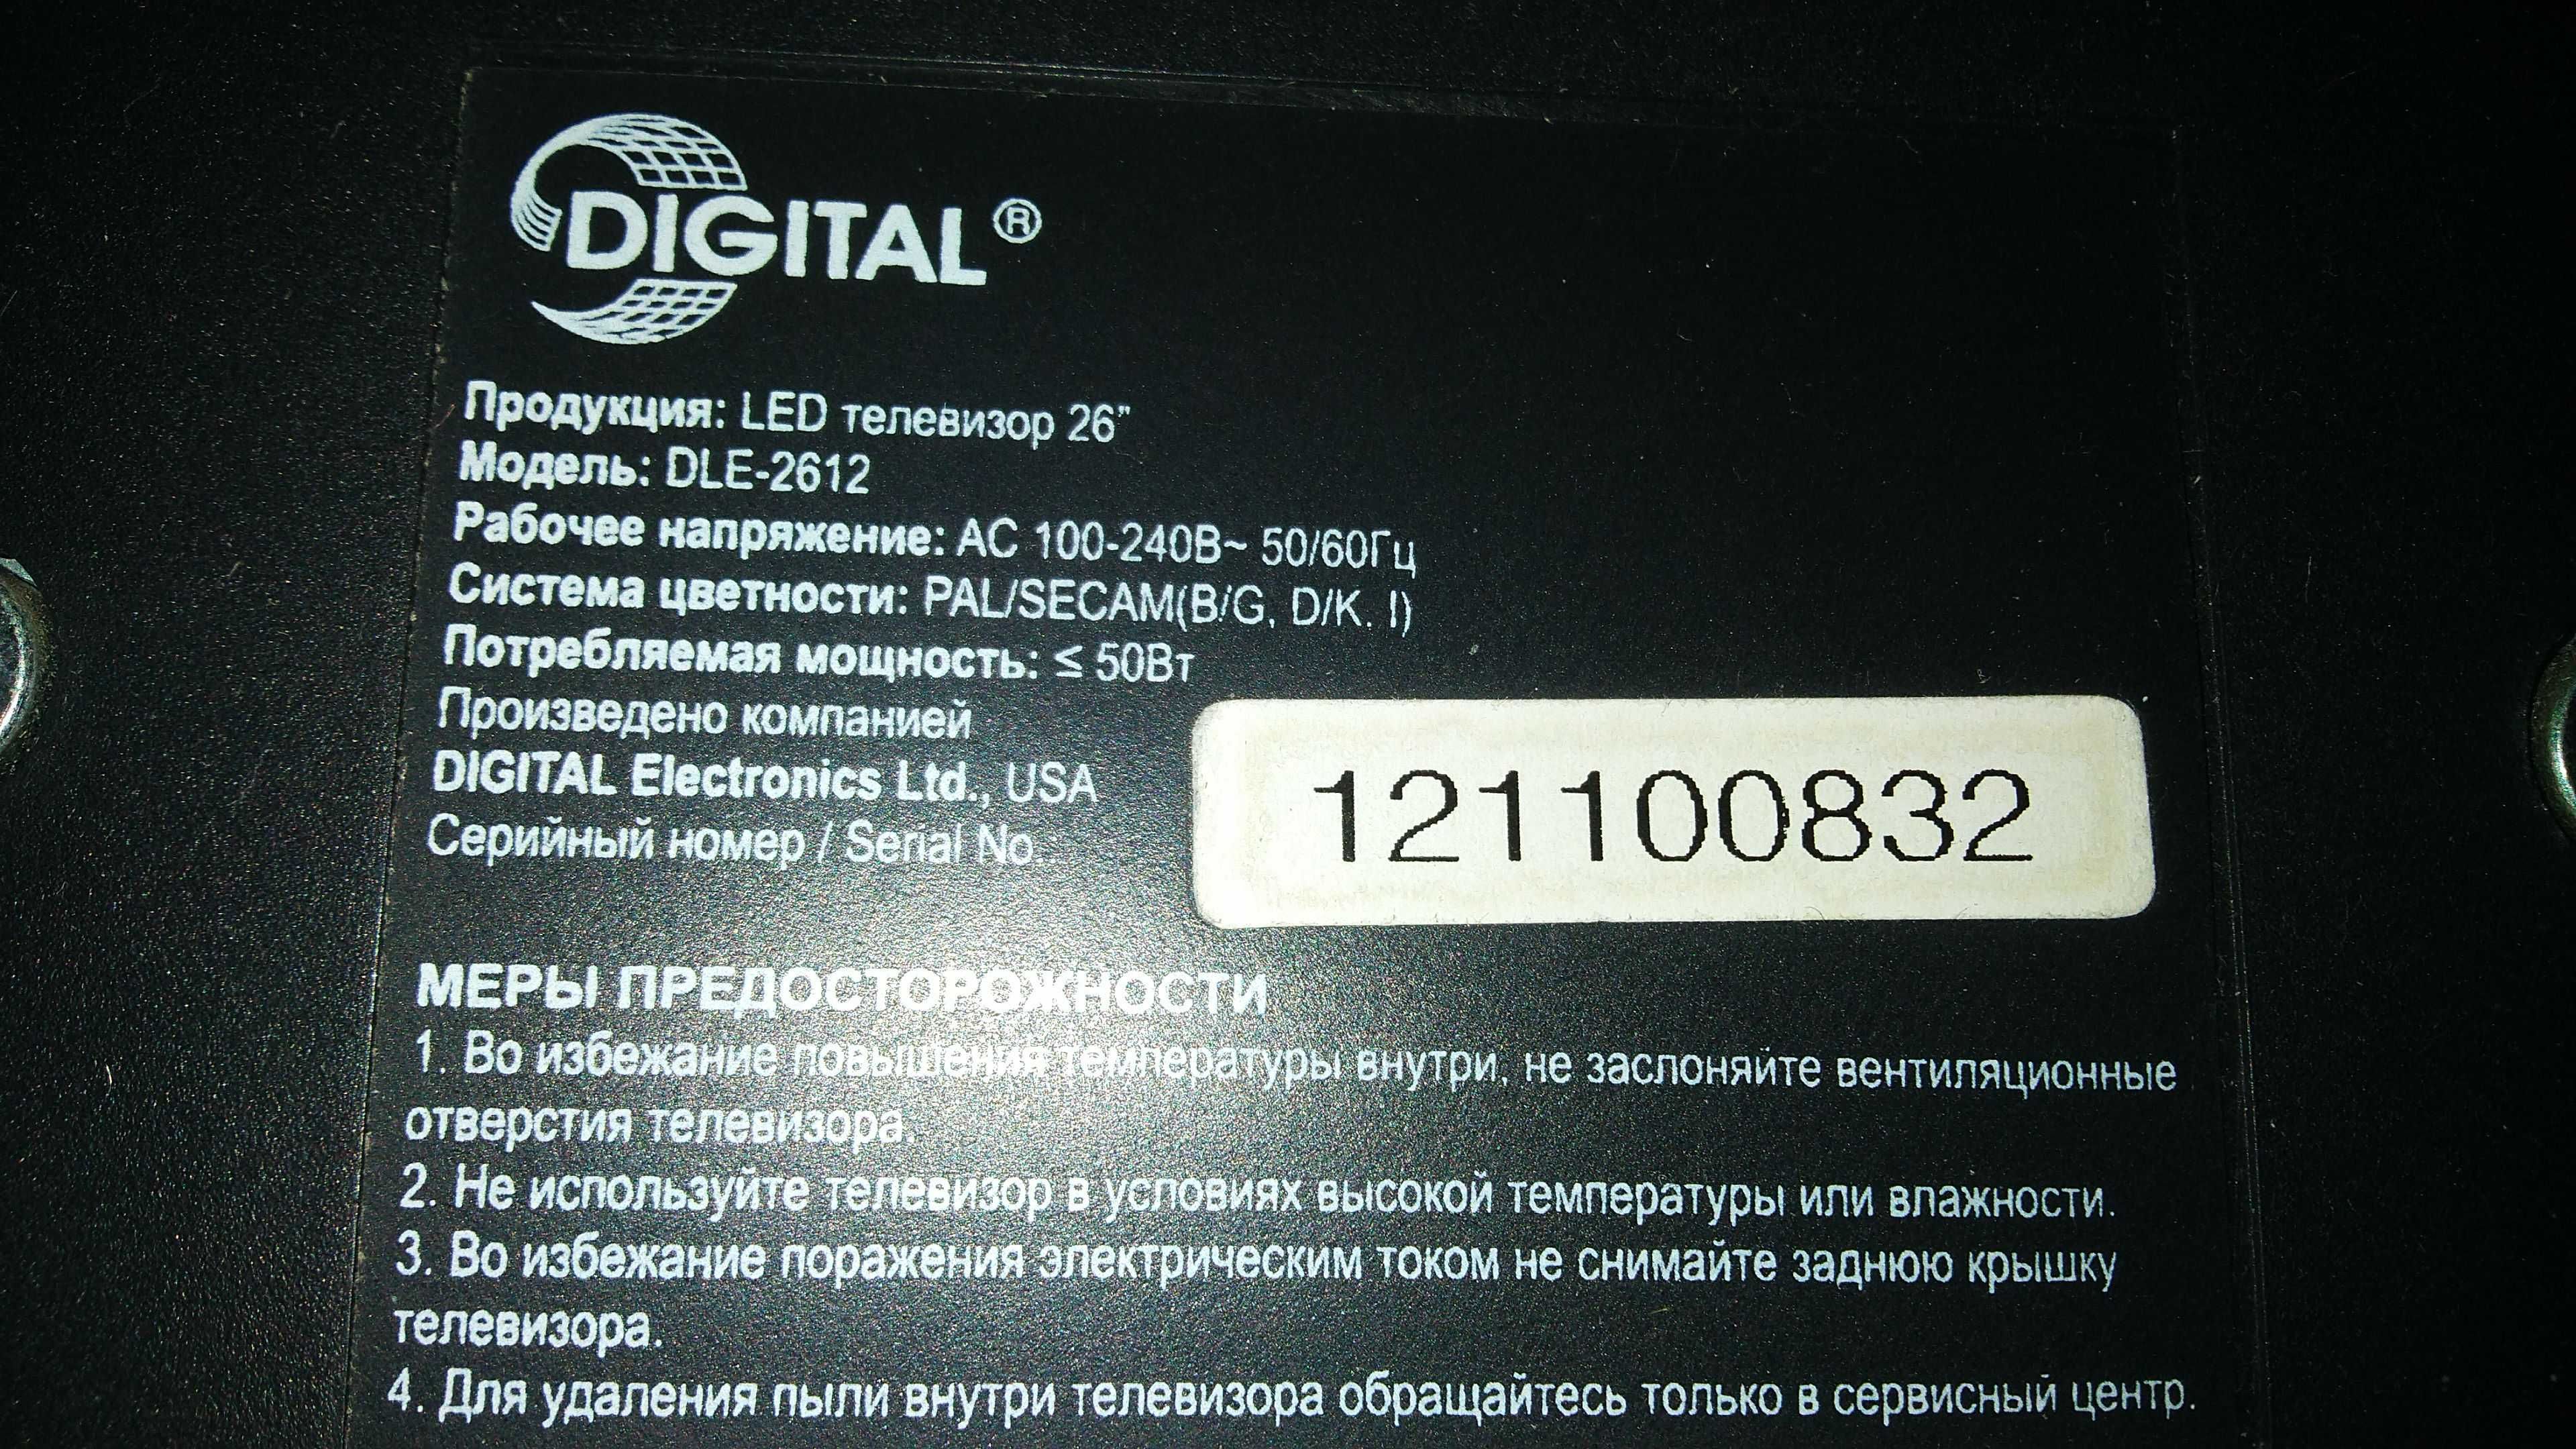 Телевизор "DIGITAL" DLE-2612 + Smart TV box-X96mini 2G\16G.  Б/У